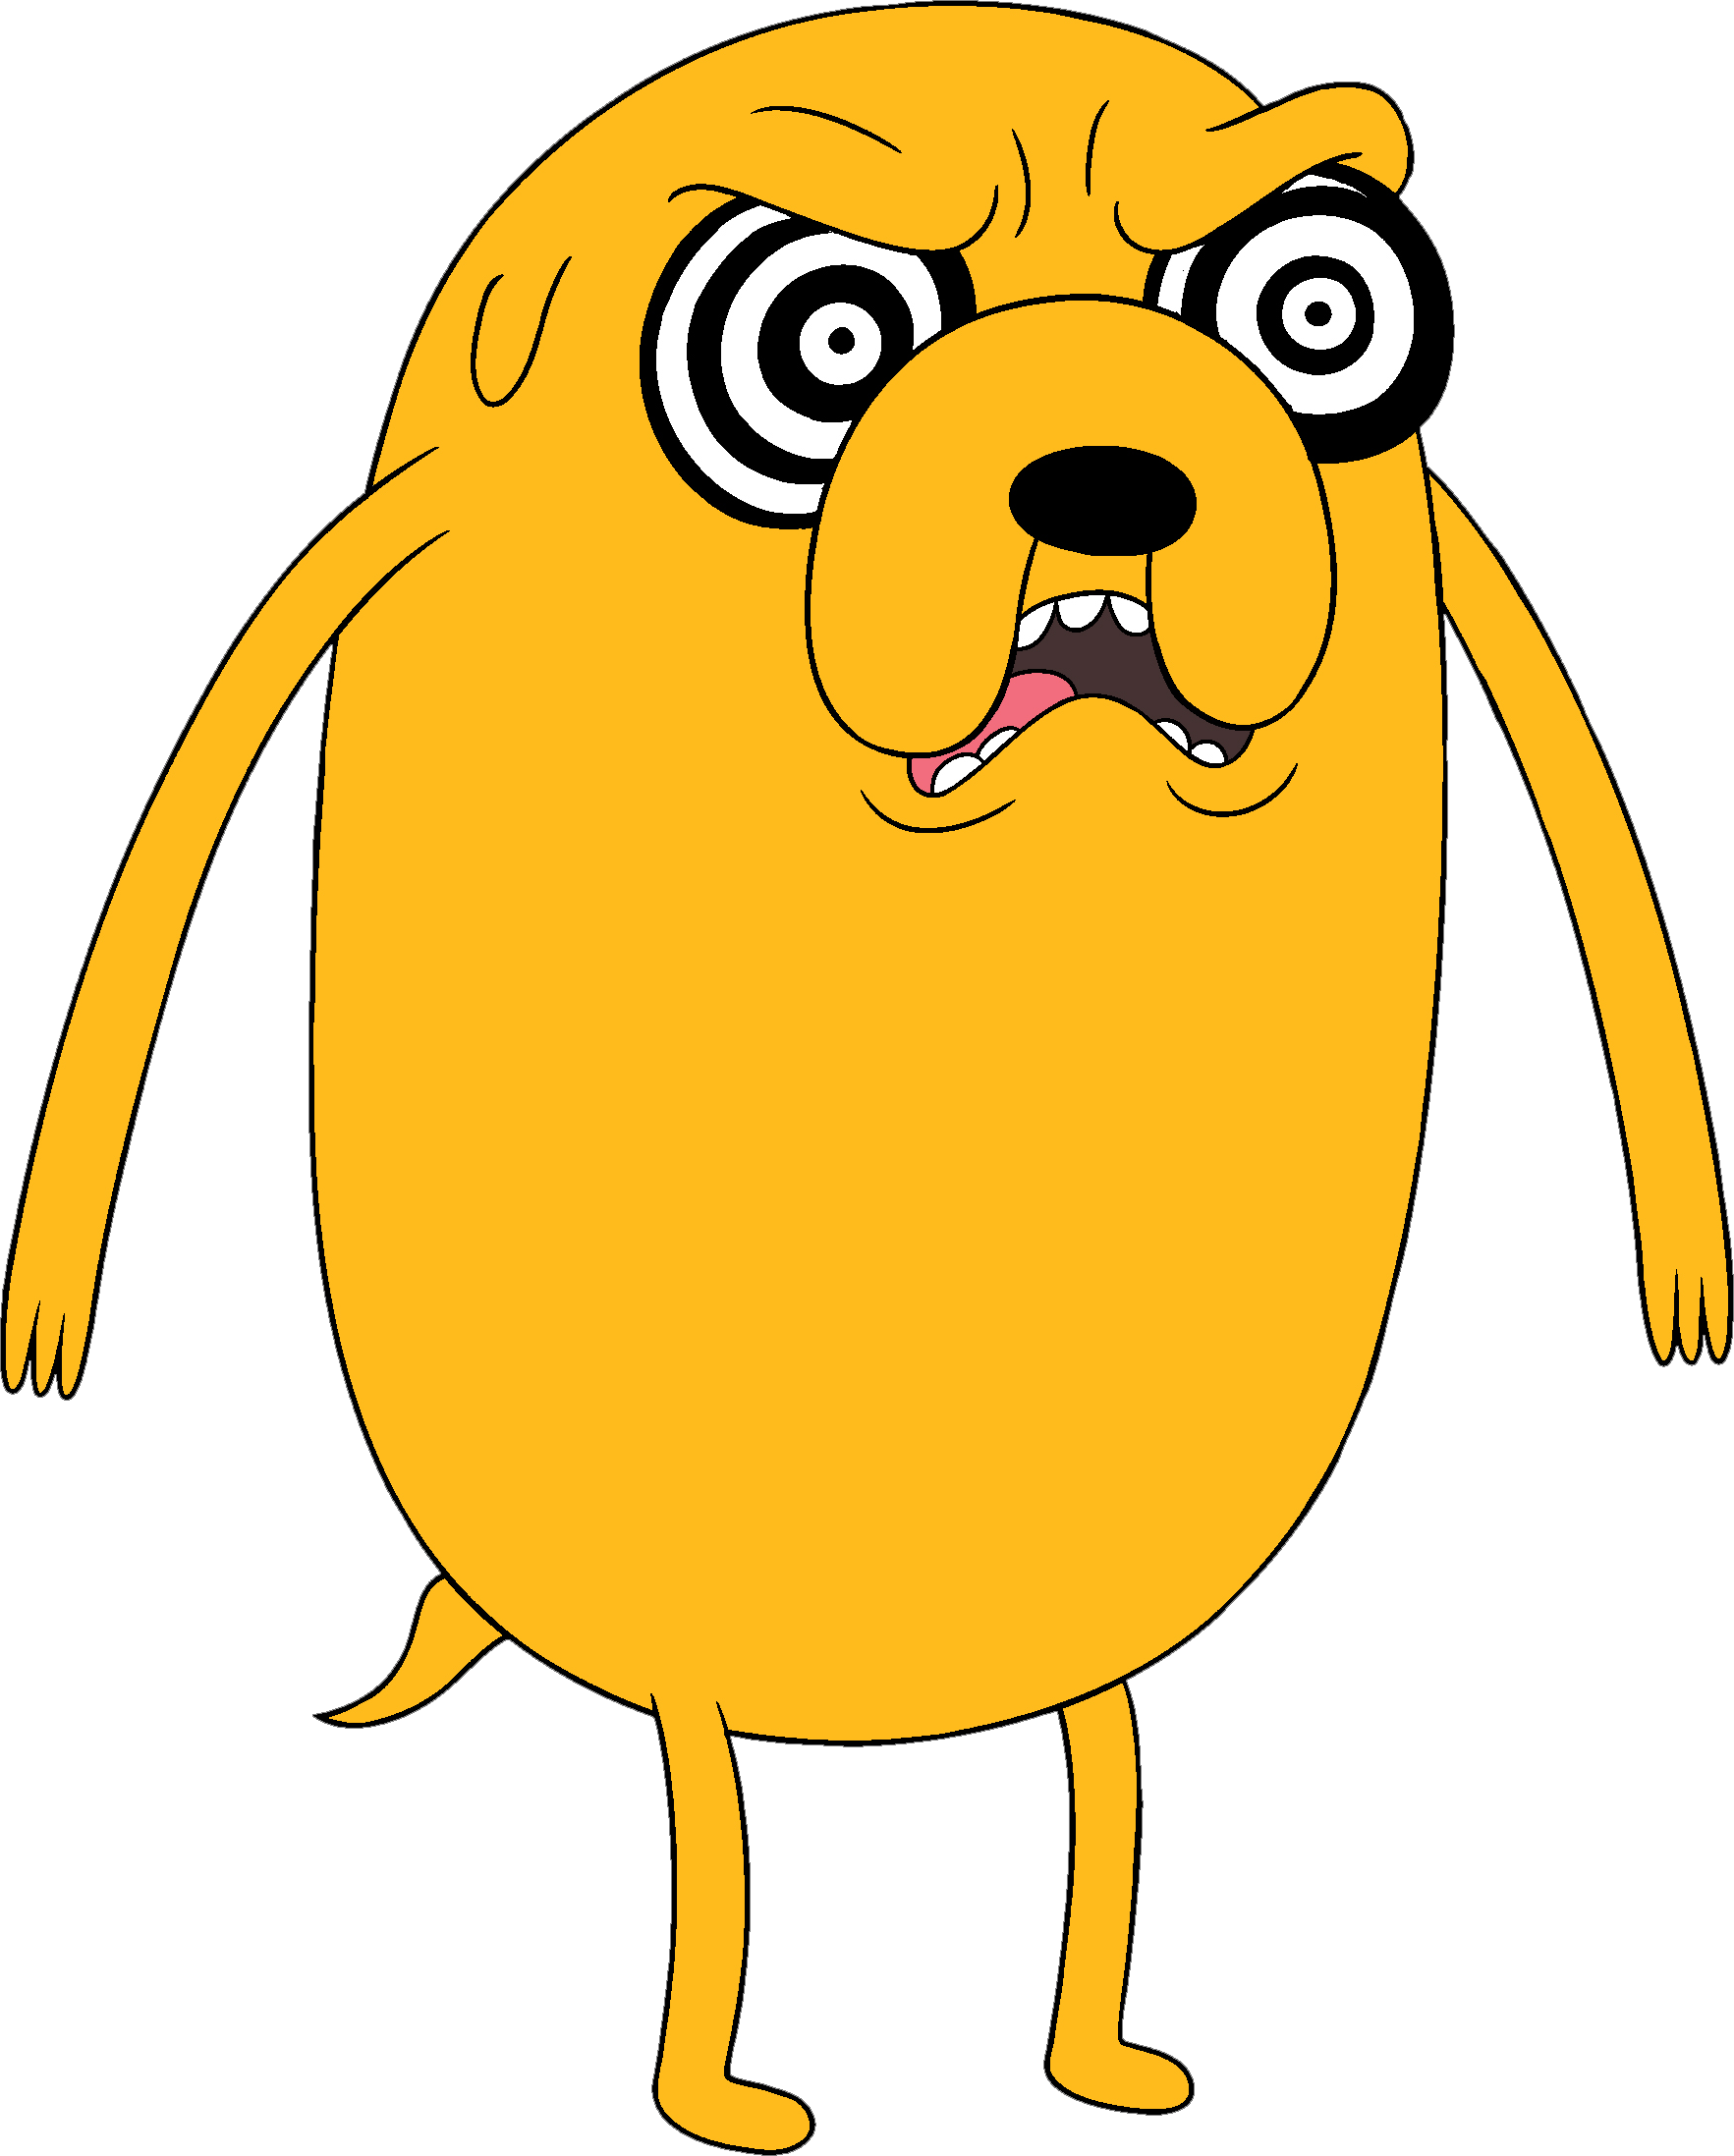 Jake | Adventure Time Wiki | Fandom powered by Wikia